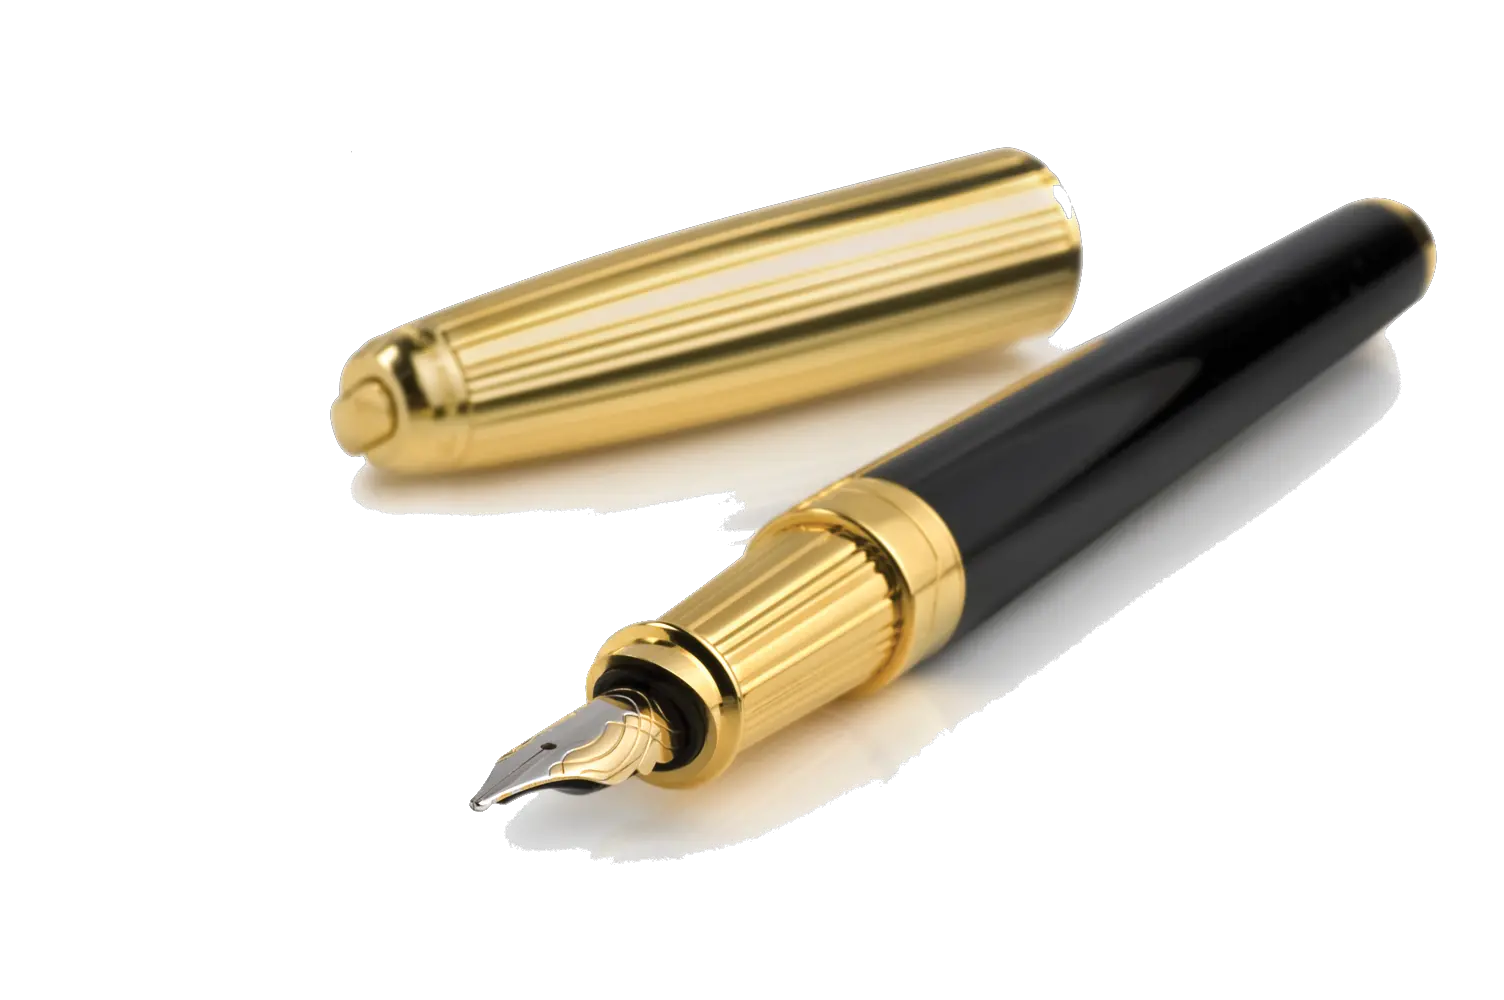 Pens Png Clipart Vectors Psd Templates Free Png Images All Types Of Pen Pen Vector Png